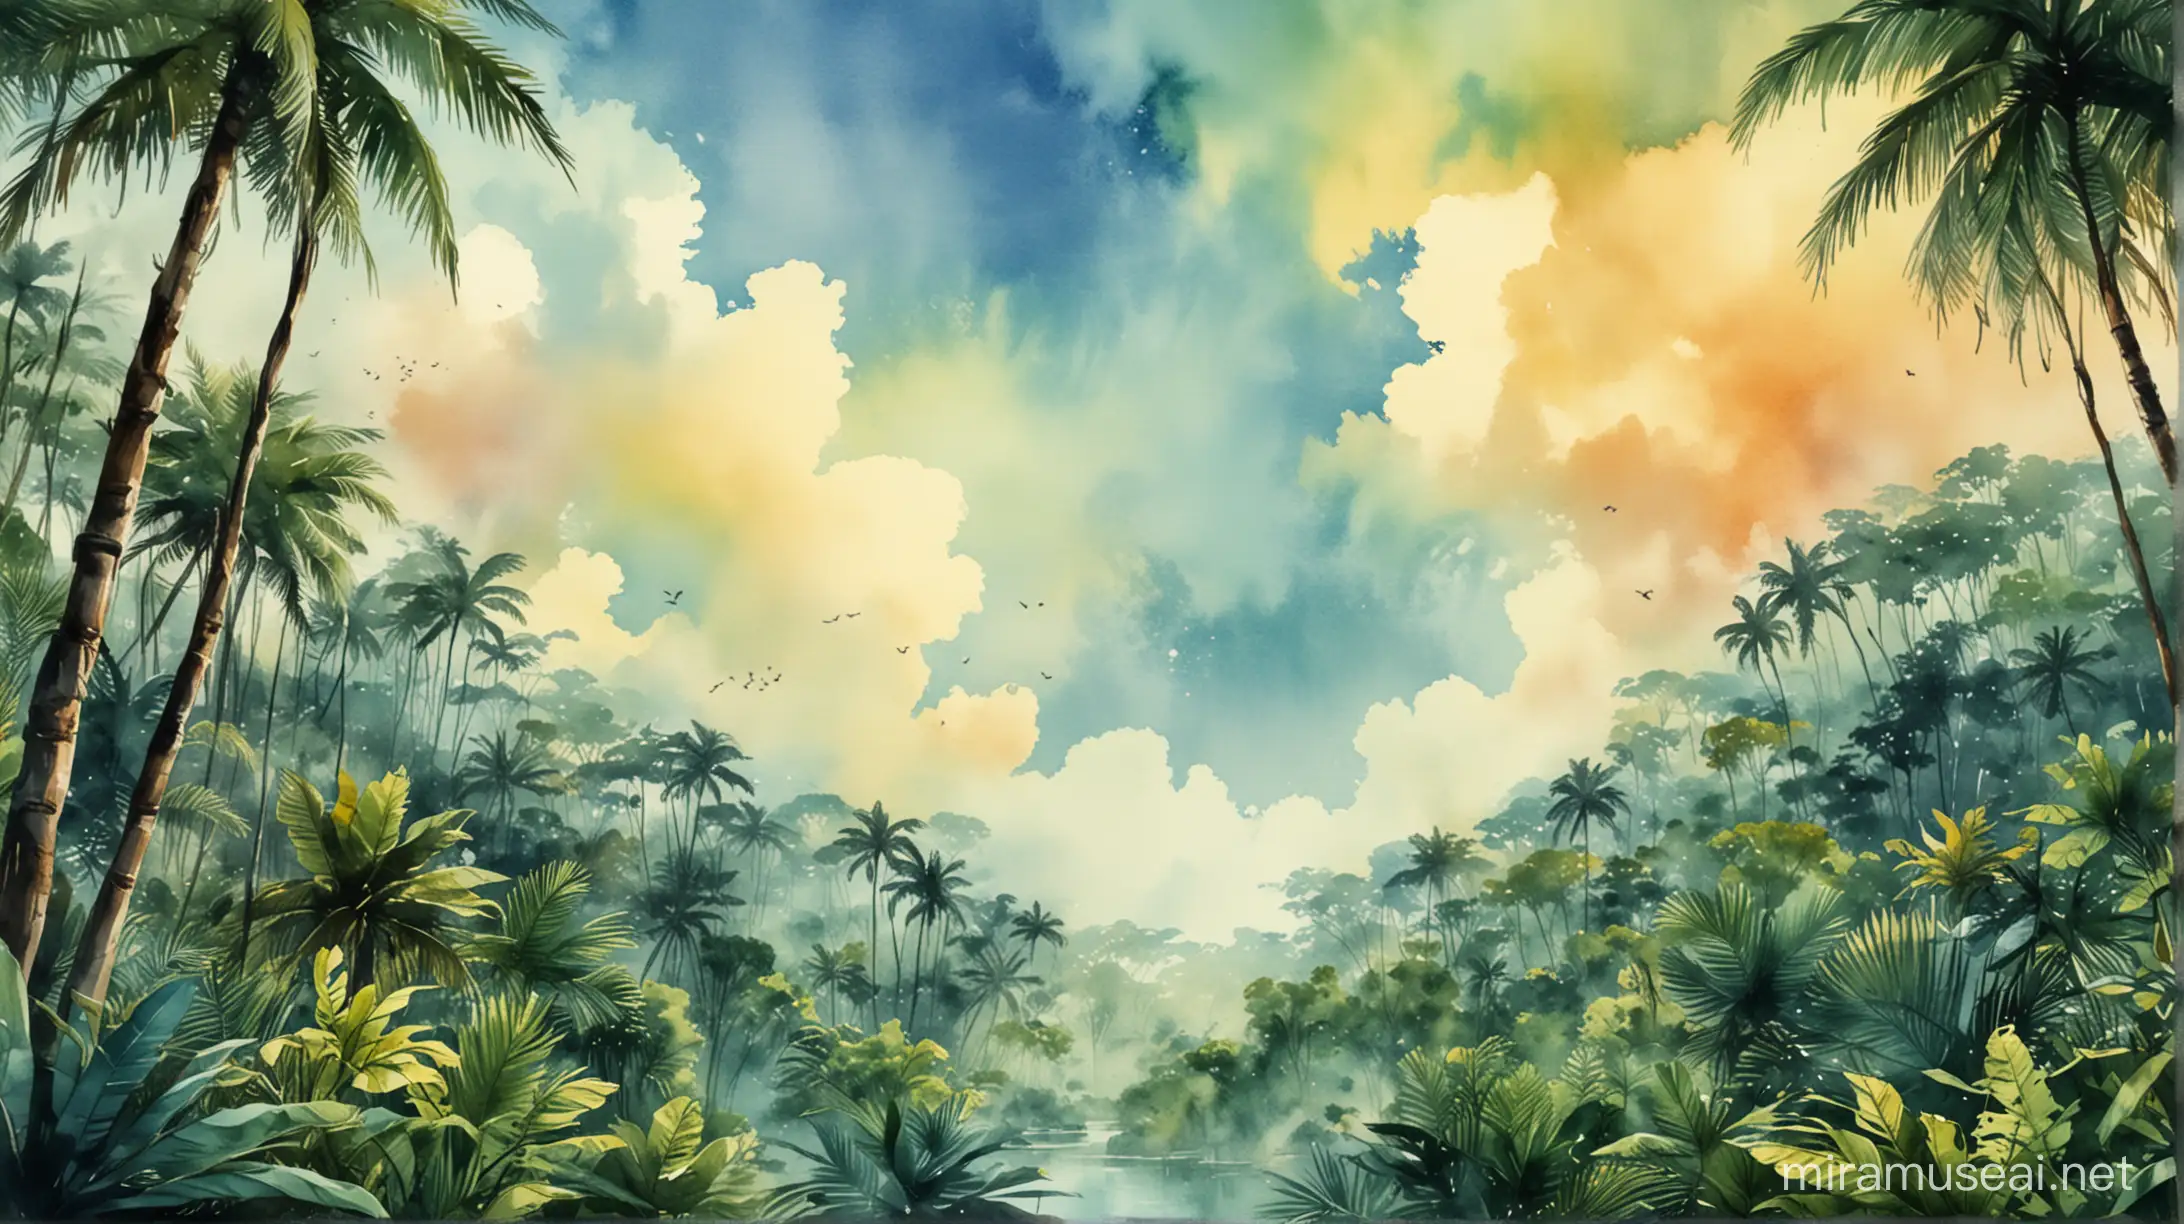 Vibrant Jungle Sky in Aquarela Style